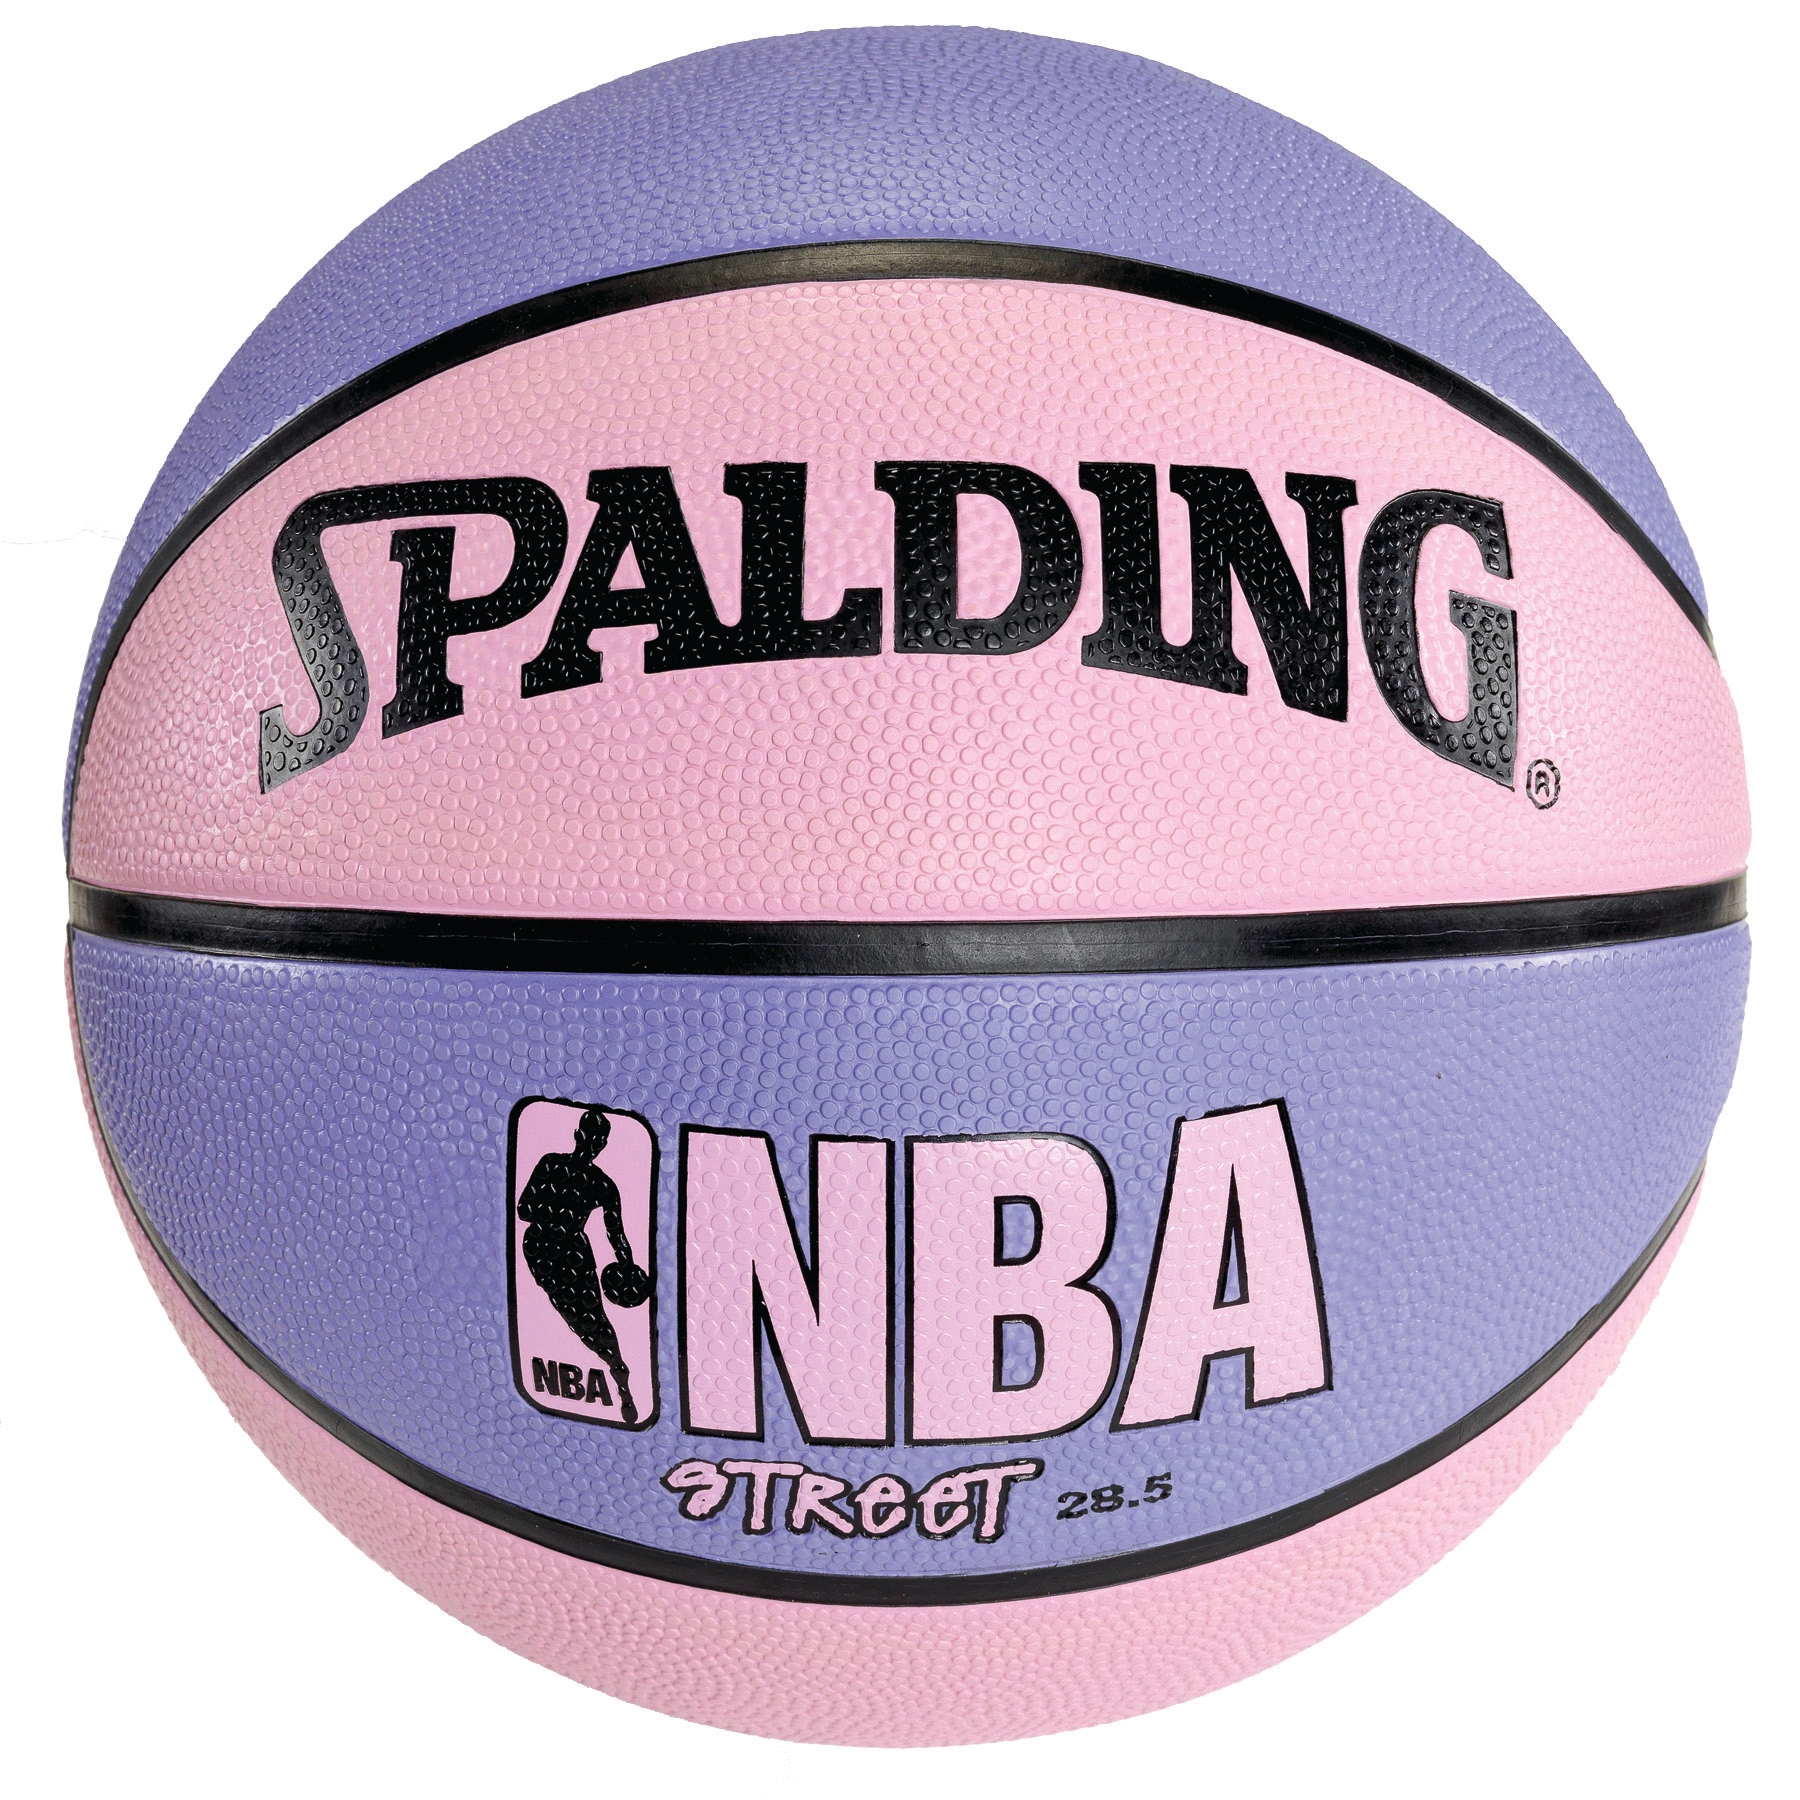 UPC 029321731325 product image for Spalding NBA Street Basketball - Pink/Purple | upcitemdb.com